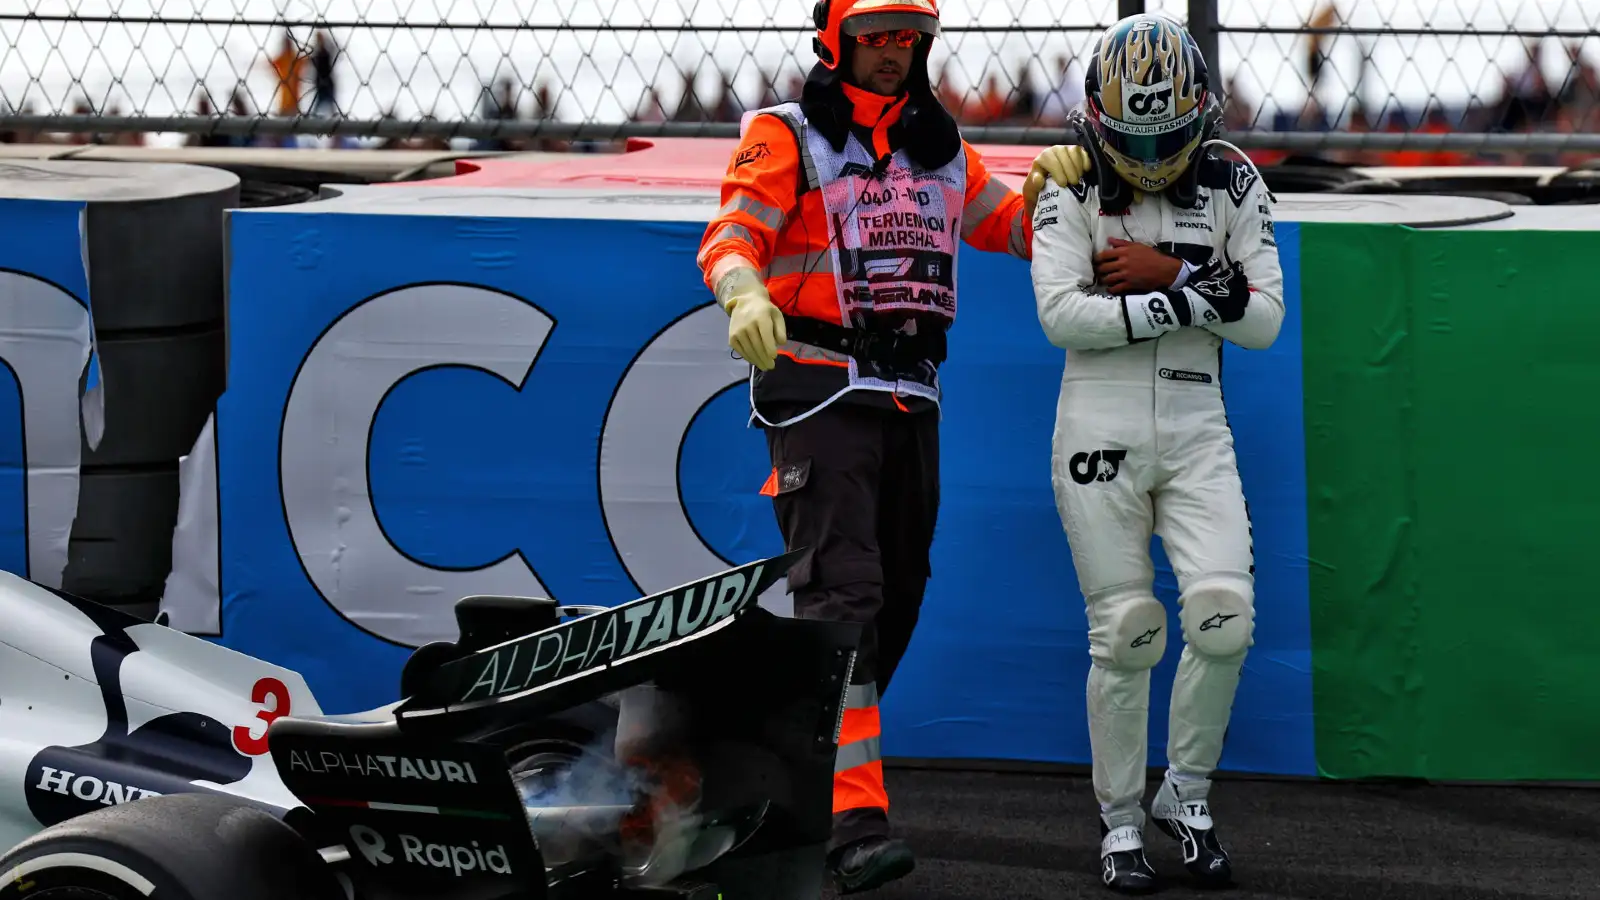 Dutch Grand Prix: AlphaTauri's Daniel Ricciardo cradles his left hand in pain after crashing during FP2.